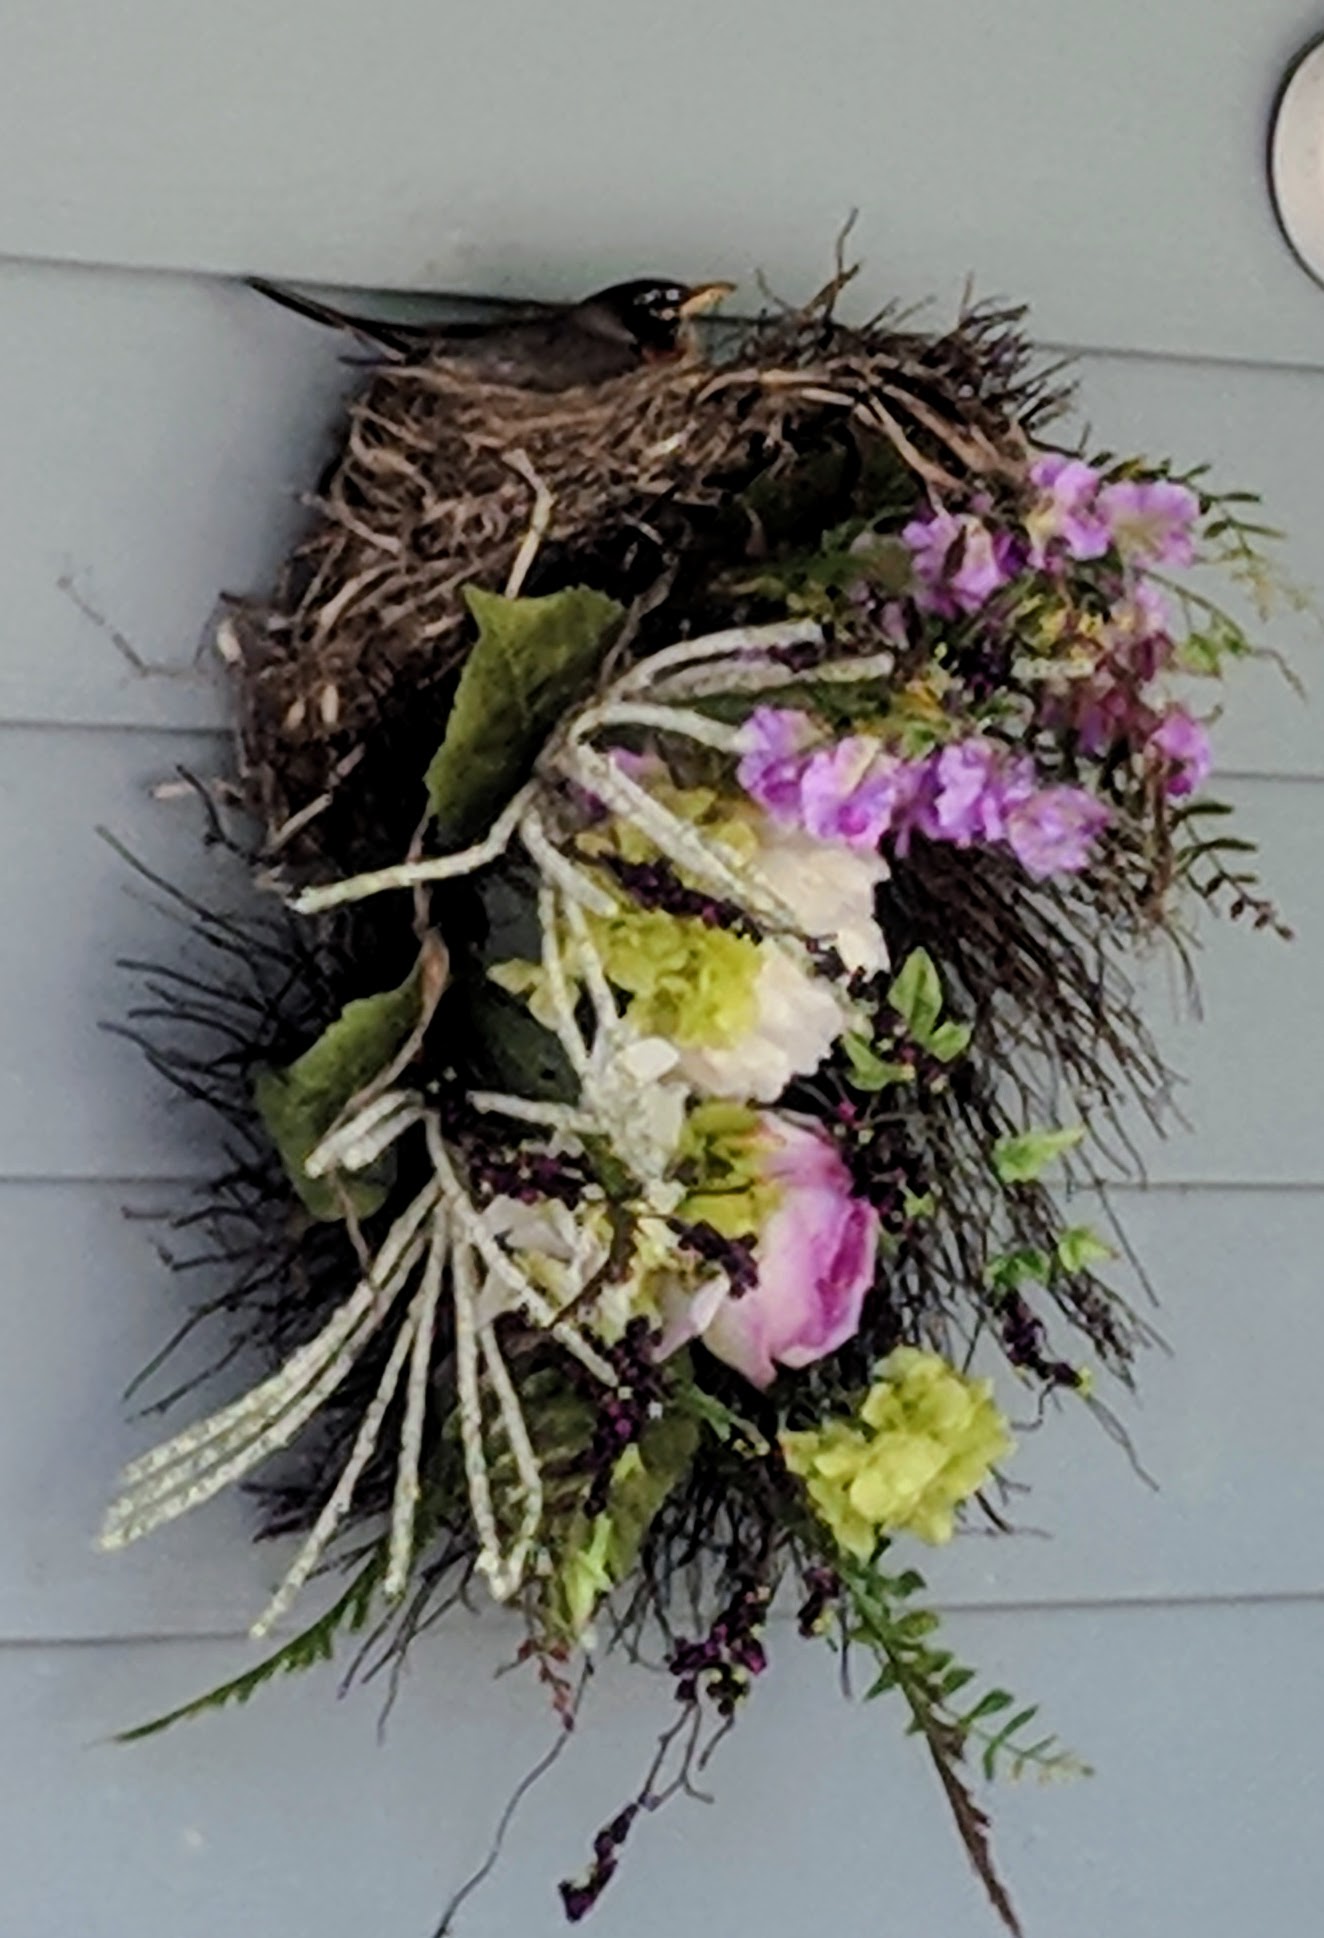 Robin nesting in wreath